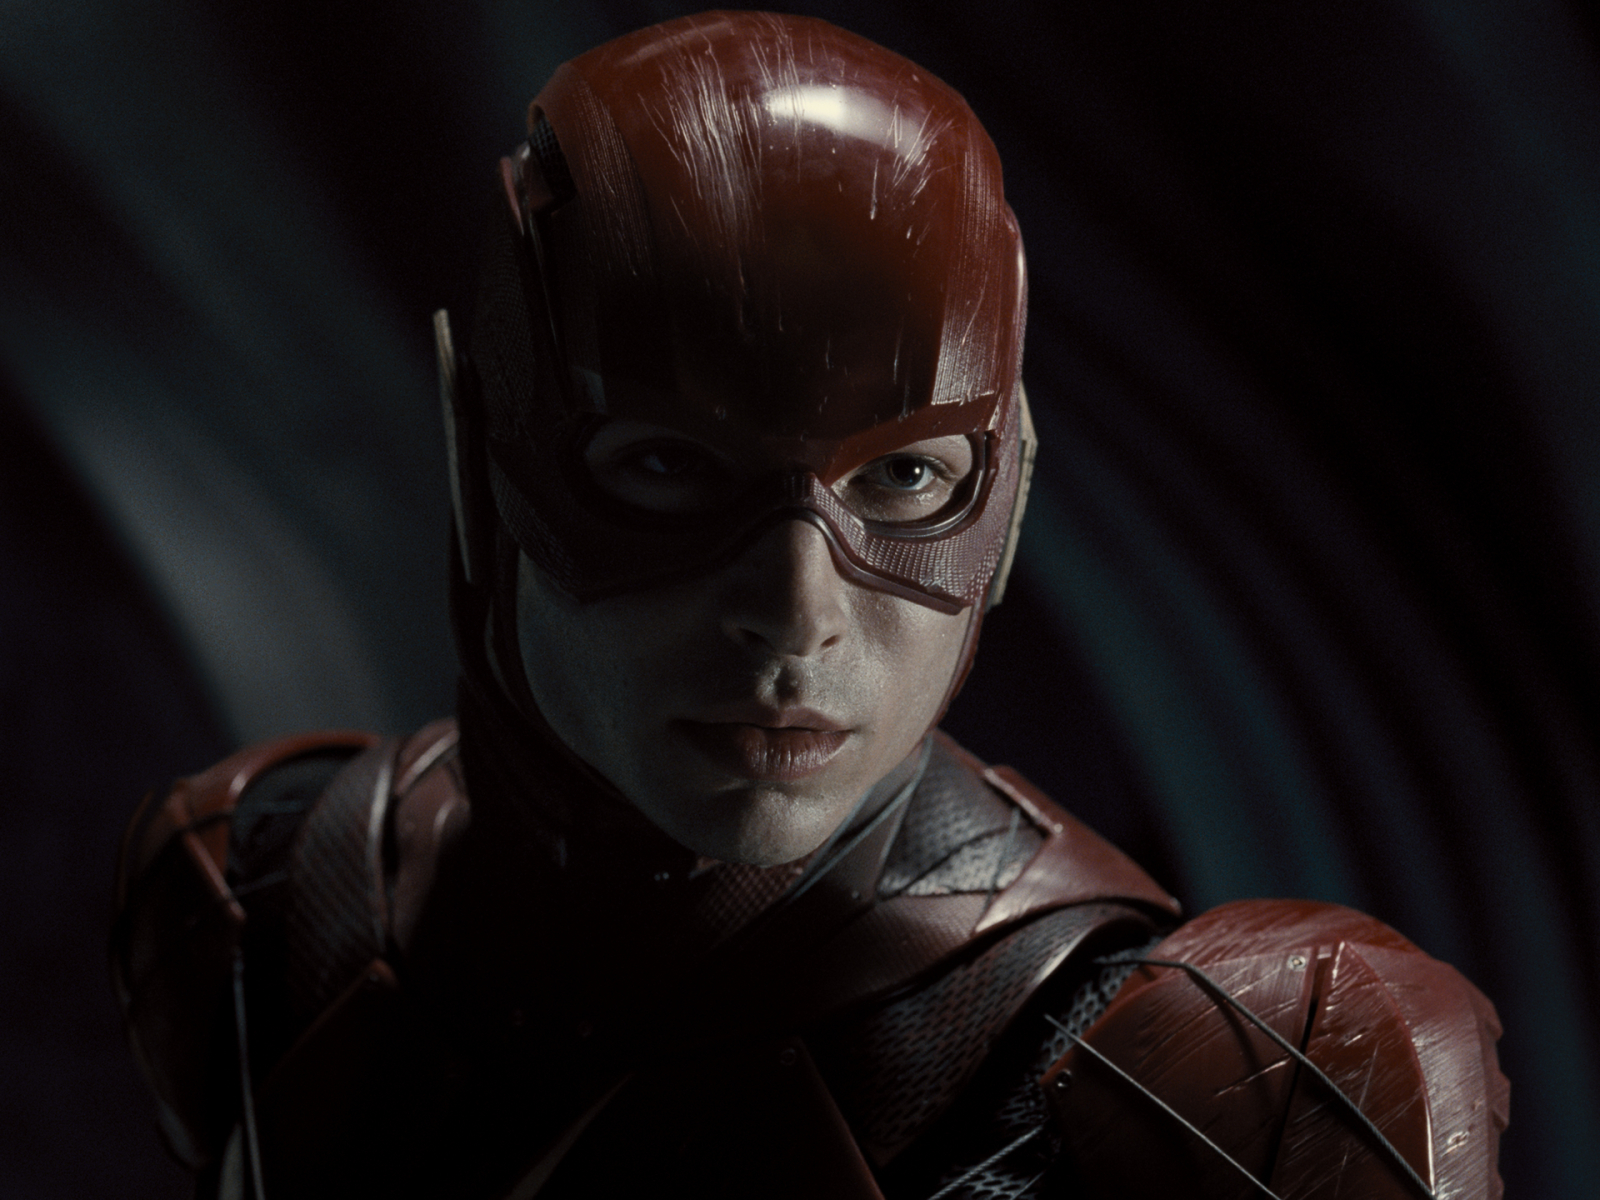 Ezra Miller As Flash Justice League Wallpapers